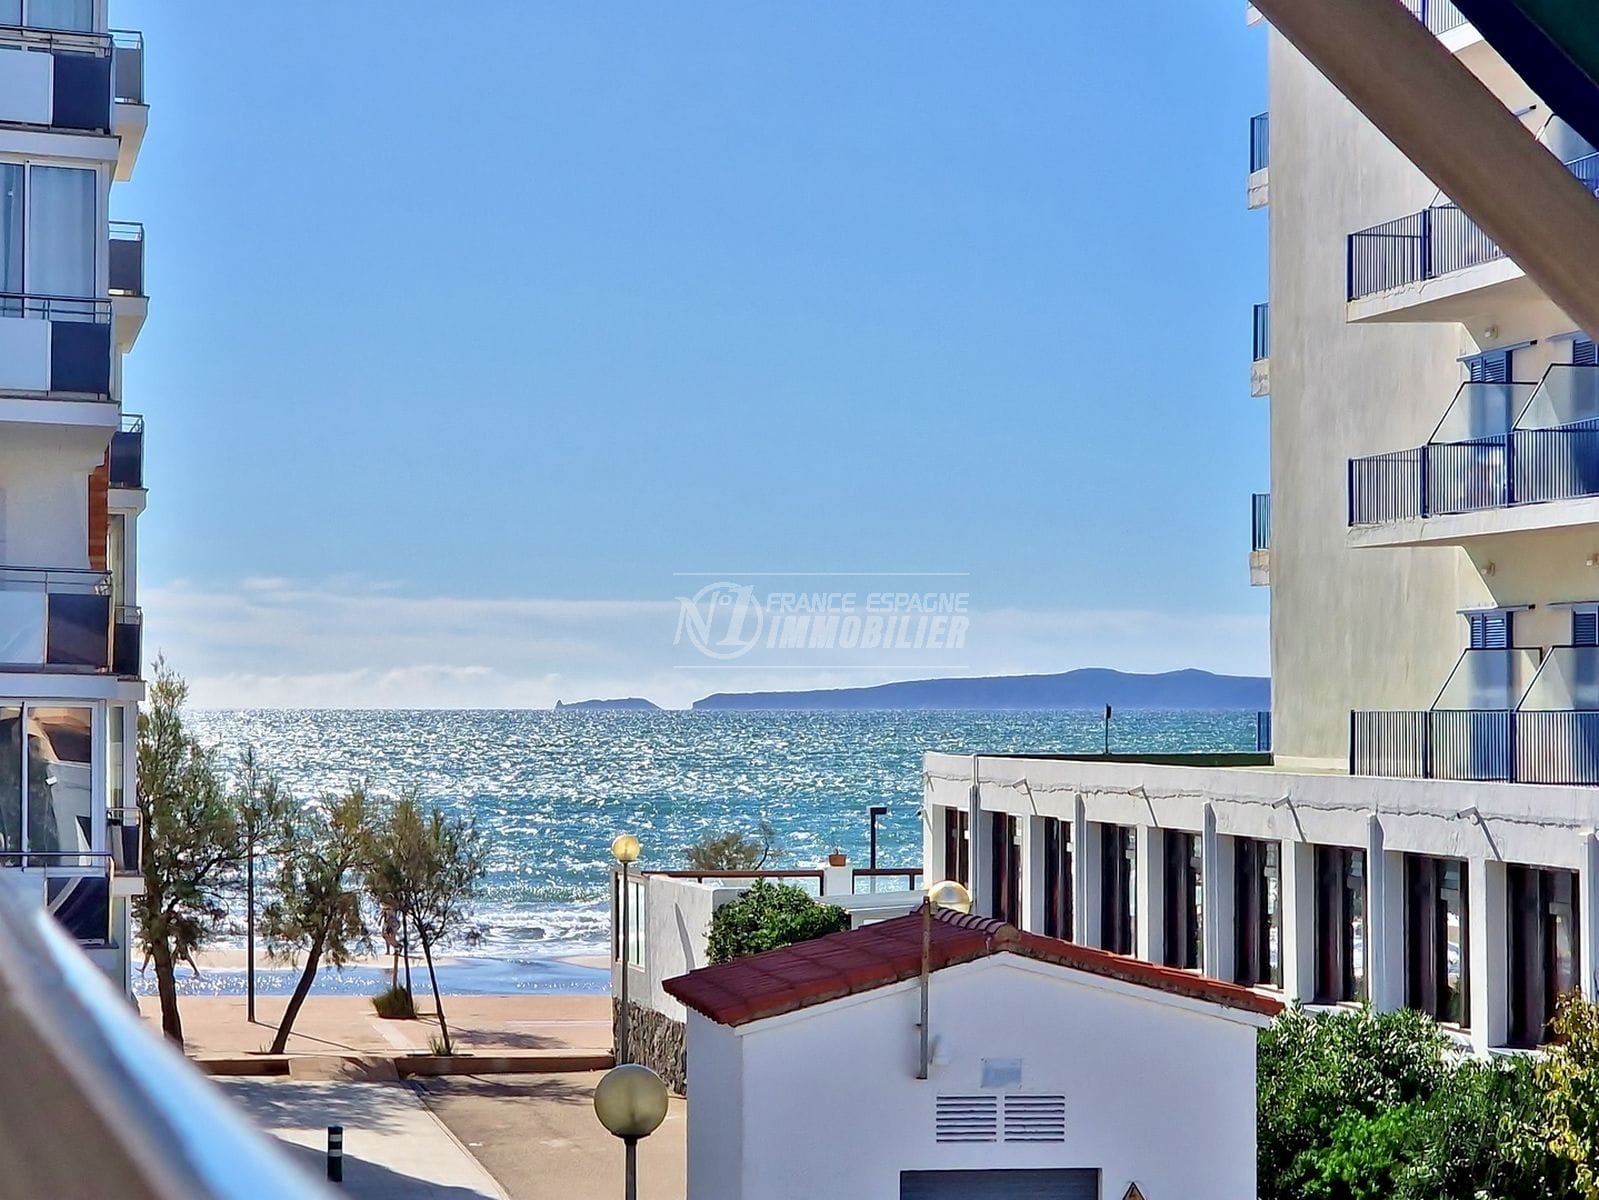 Exclusivité Roses - Studio terrace with side sea view, beach 50m